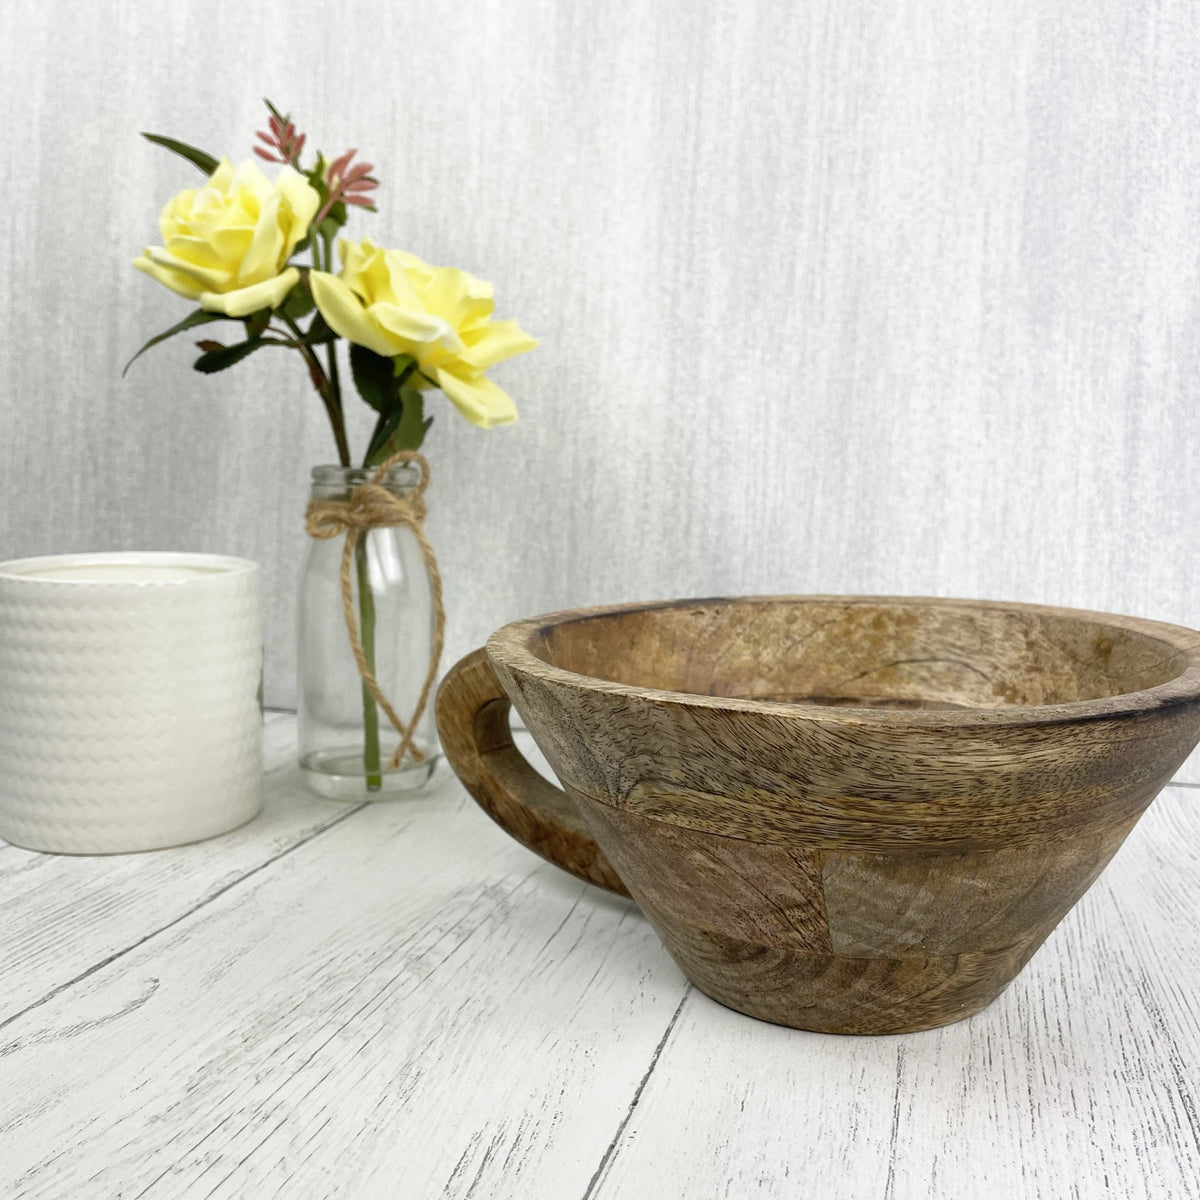 Tenere Mango wood fruit bowl with flower vase and candle